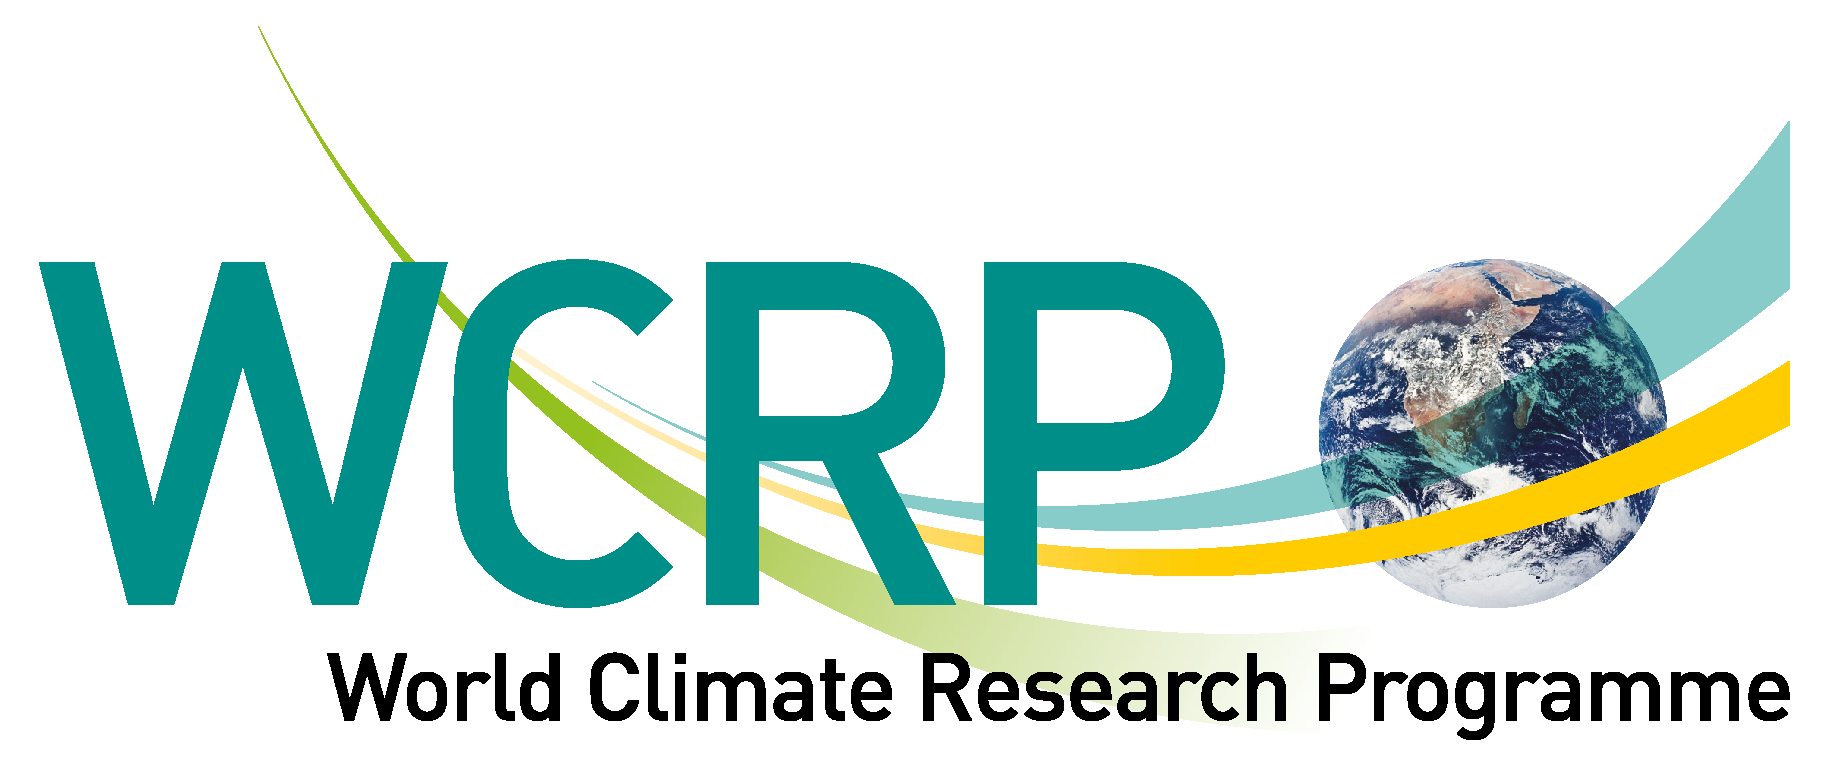 World Climate Research Programme (WCRP) Logo